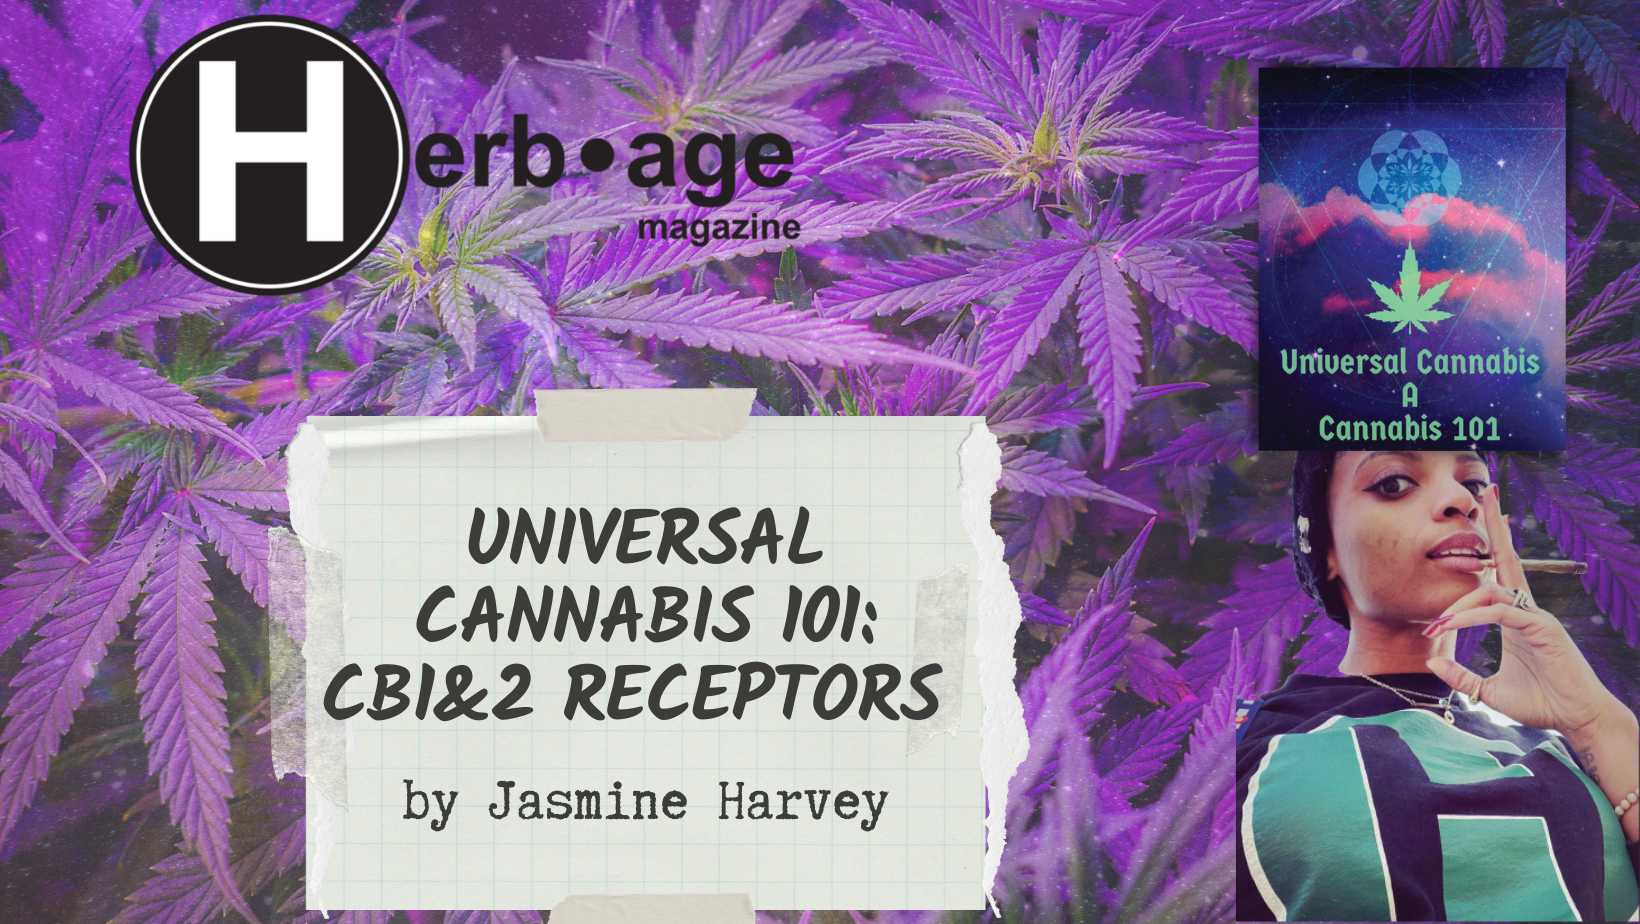 Universal Cannabis 101 CB1&2 Receptors